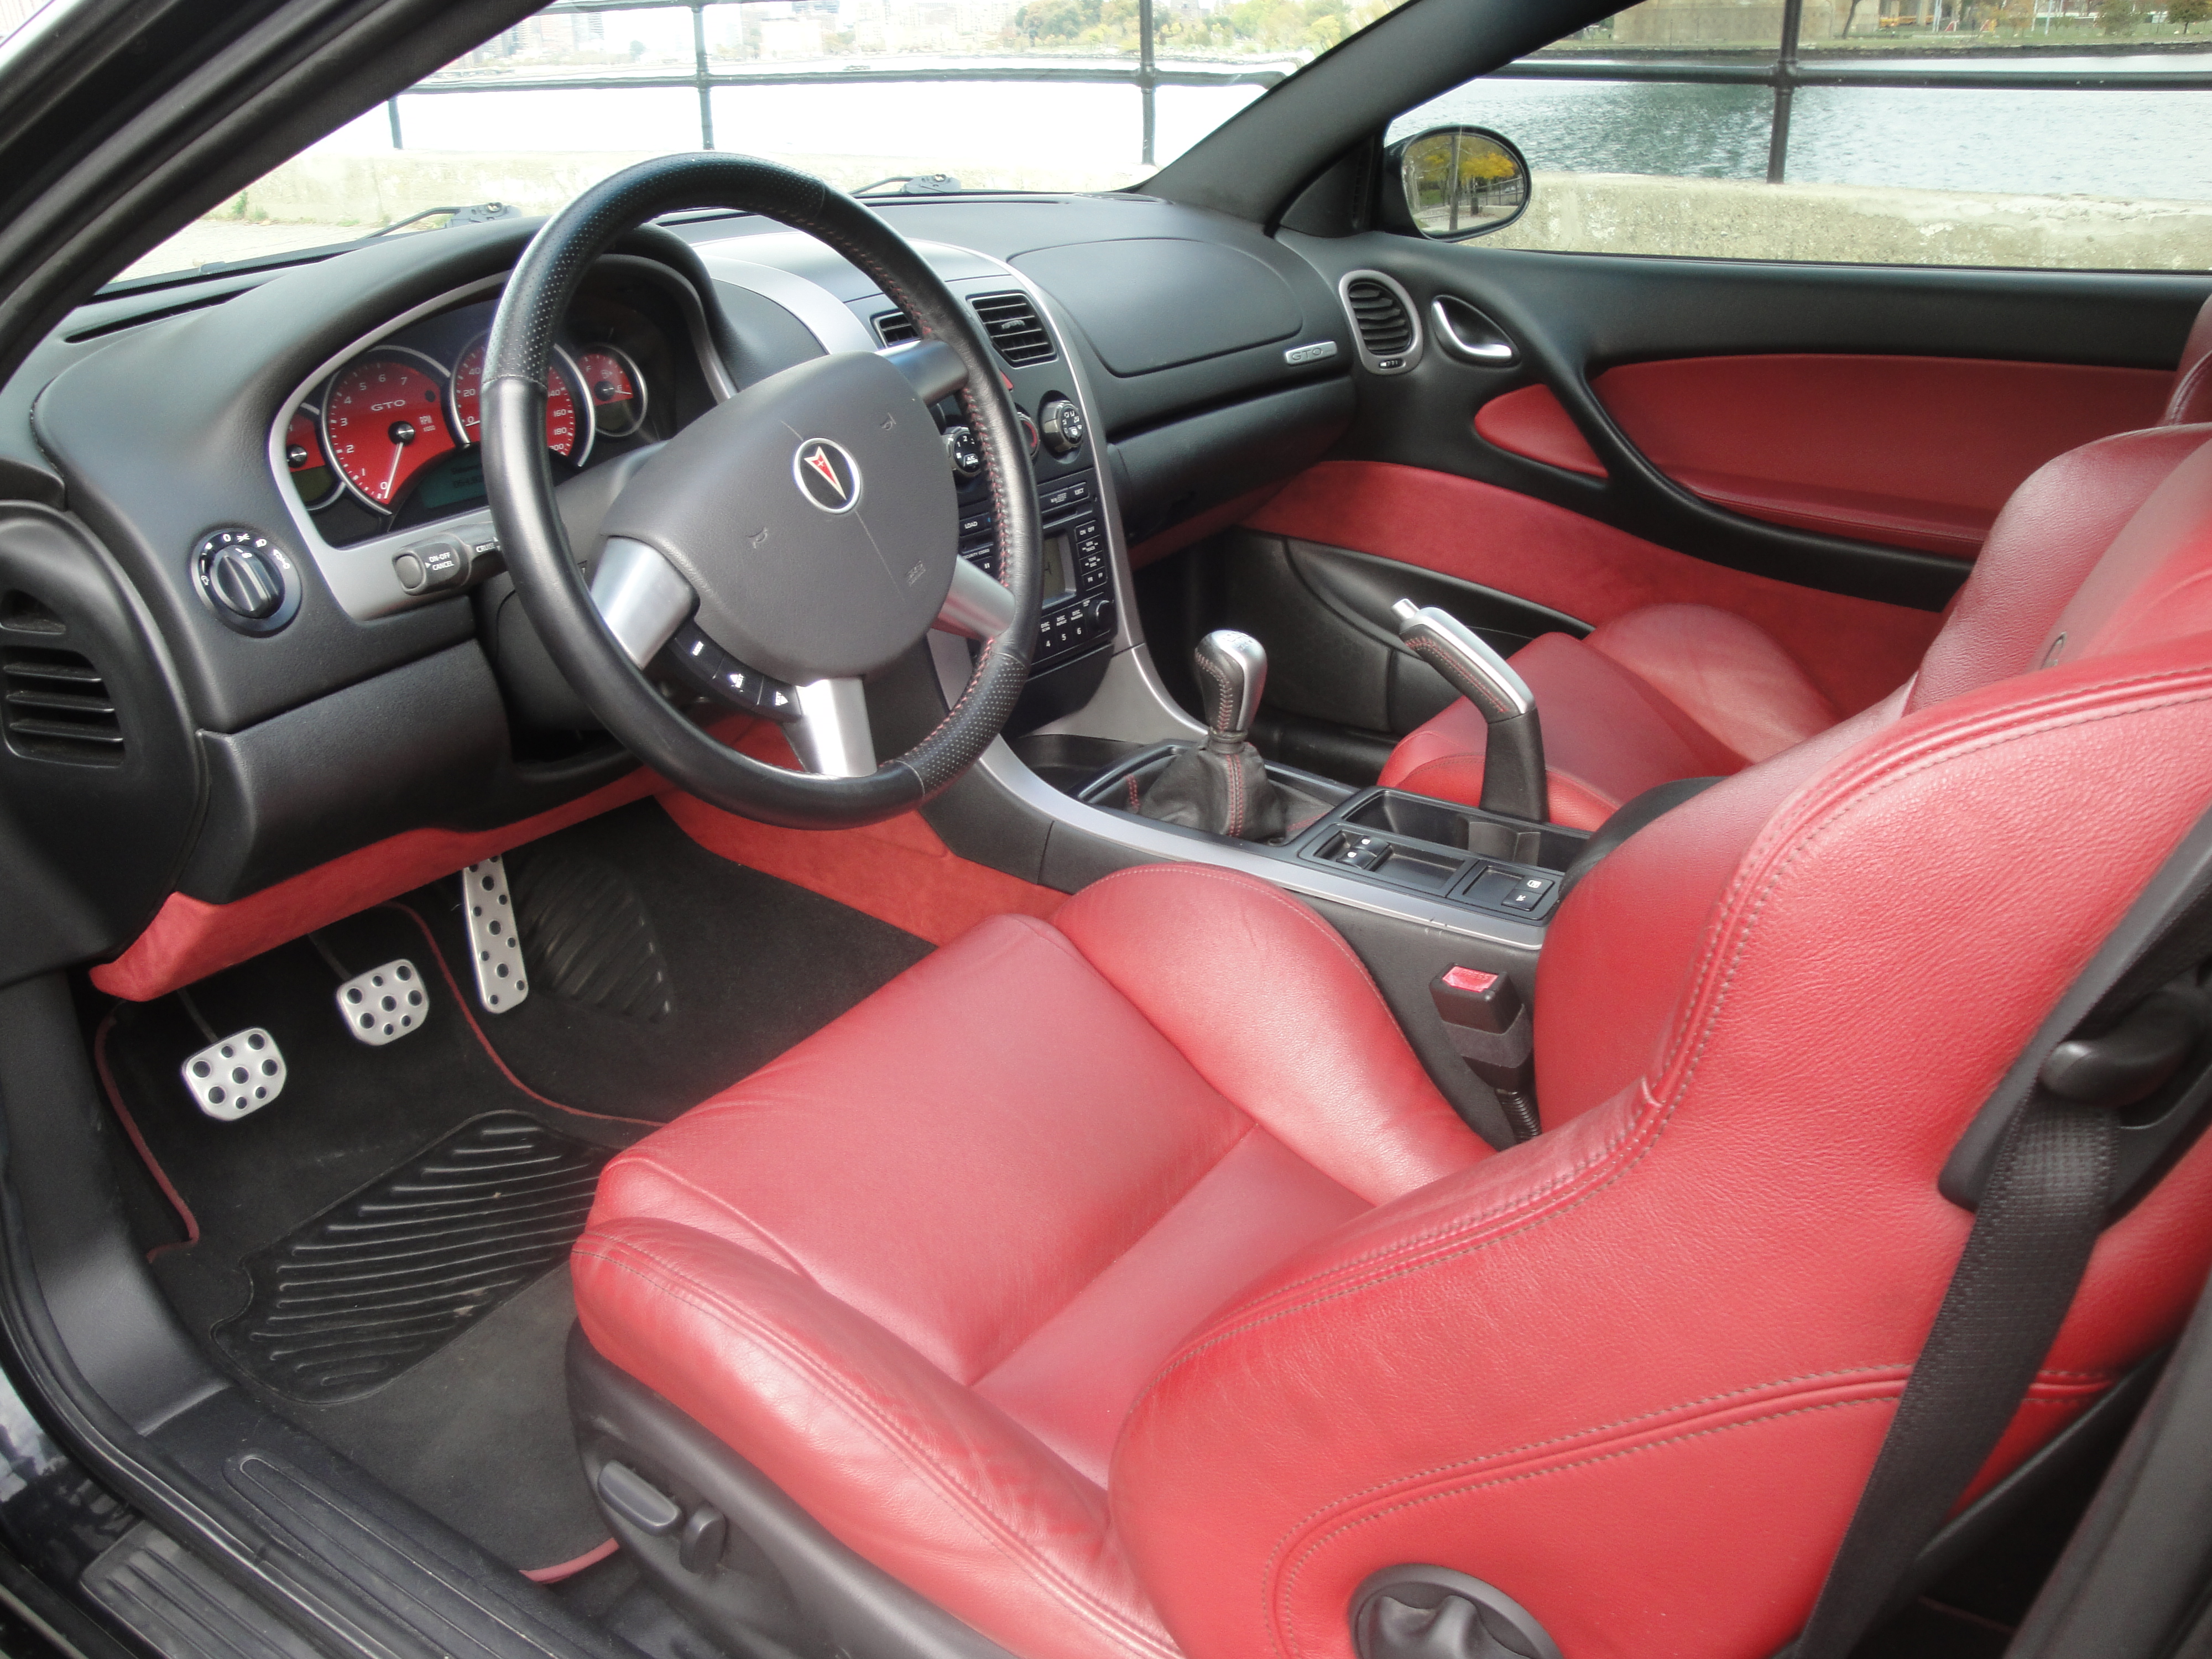 2006 Pontiac GTO Black/Red M6 55k miles - LS1TECH - Camaro and Firebird